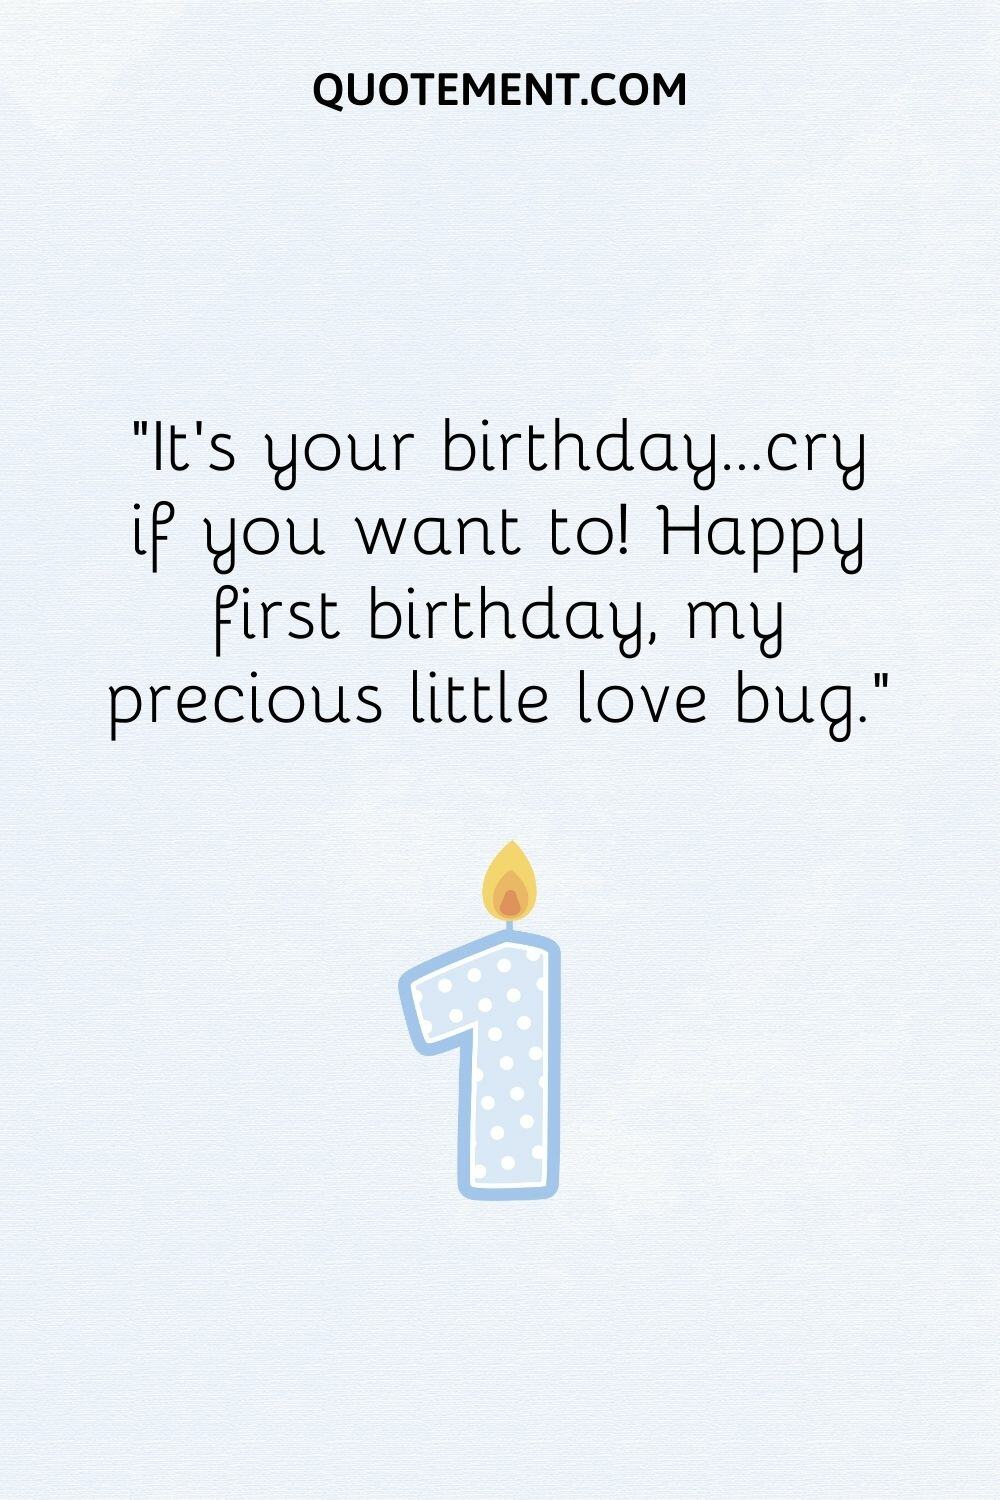  Happy first birthday, my precious little love bug